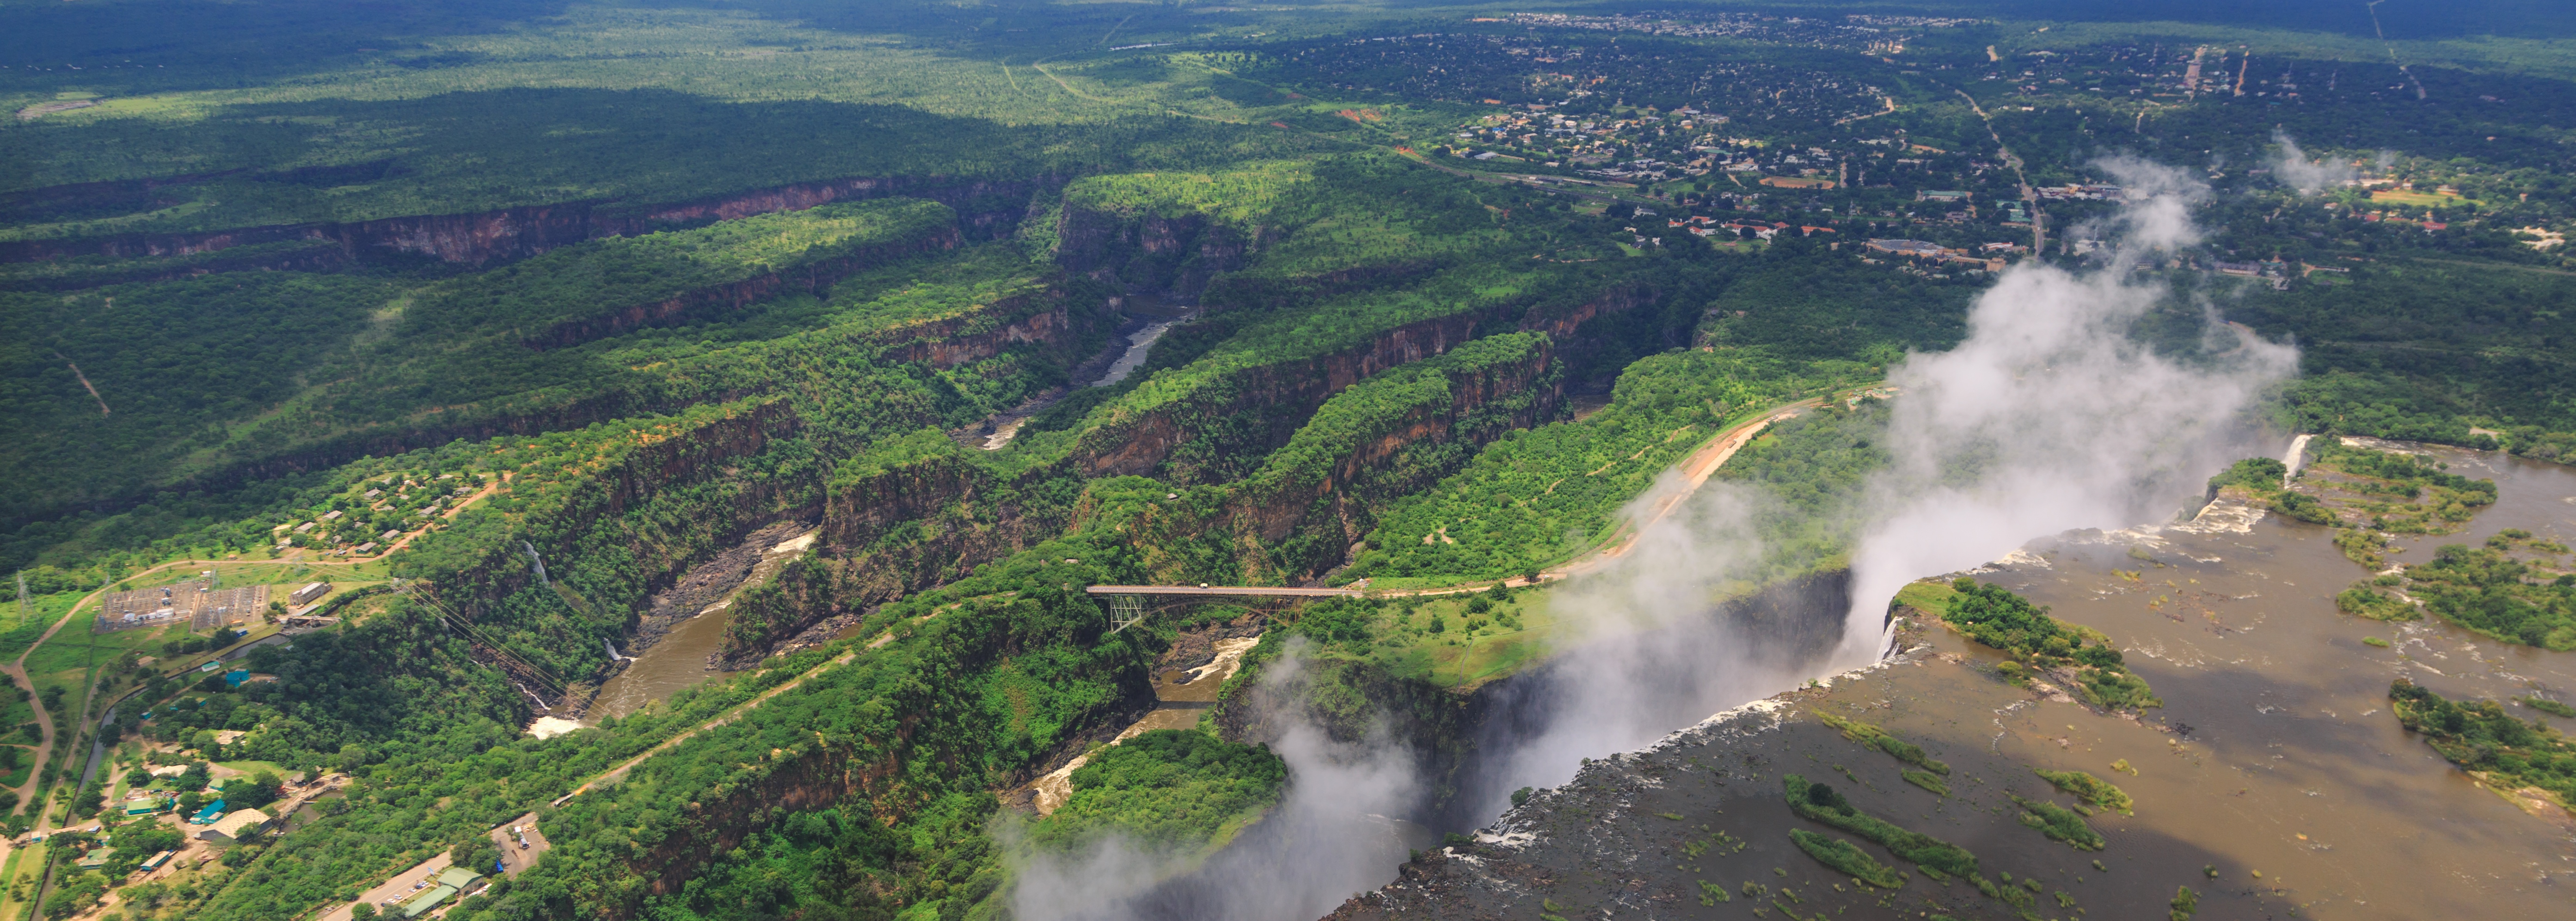 Aerial shot of Zambia